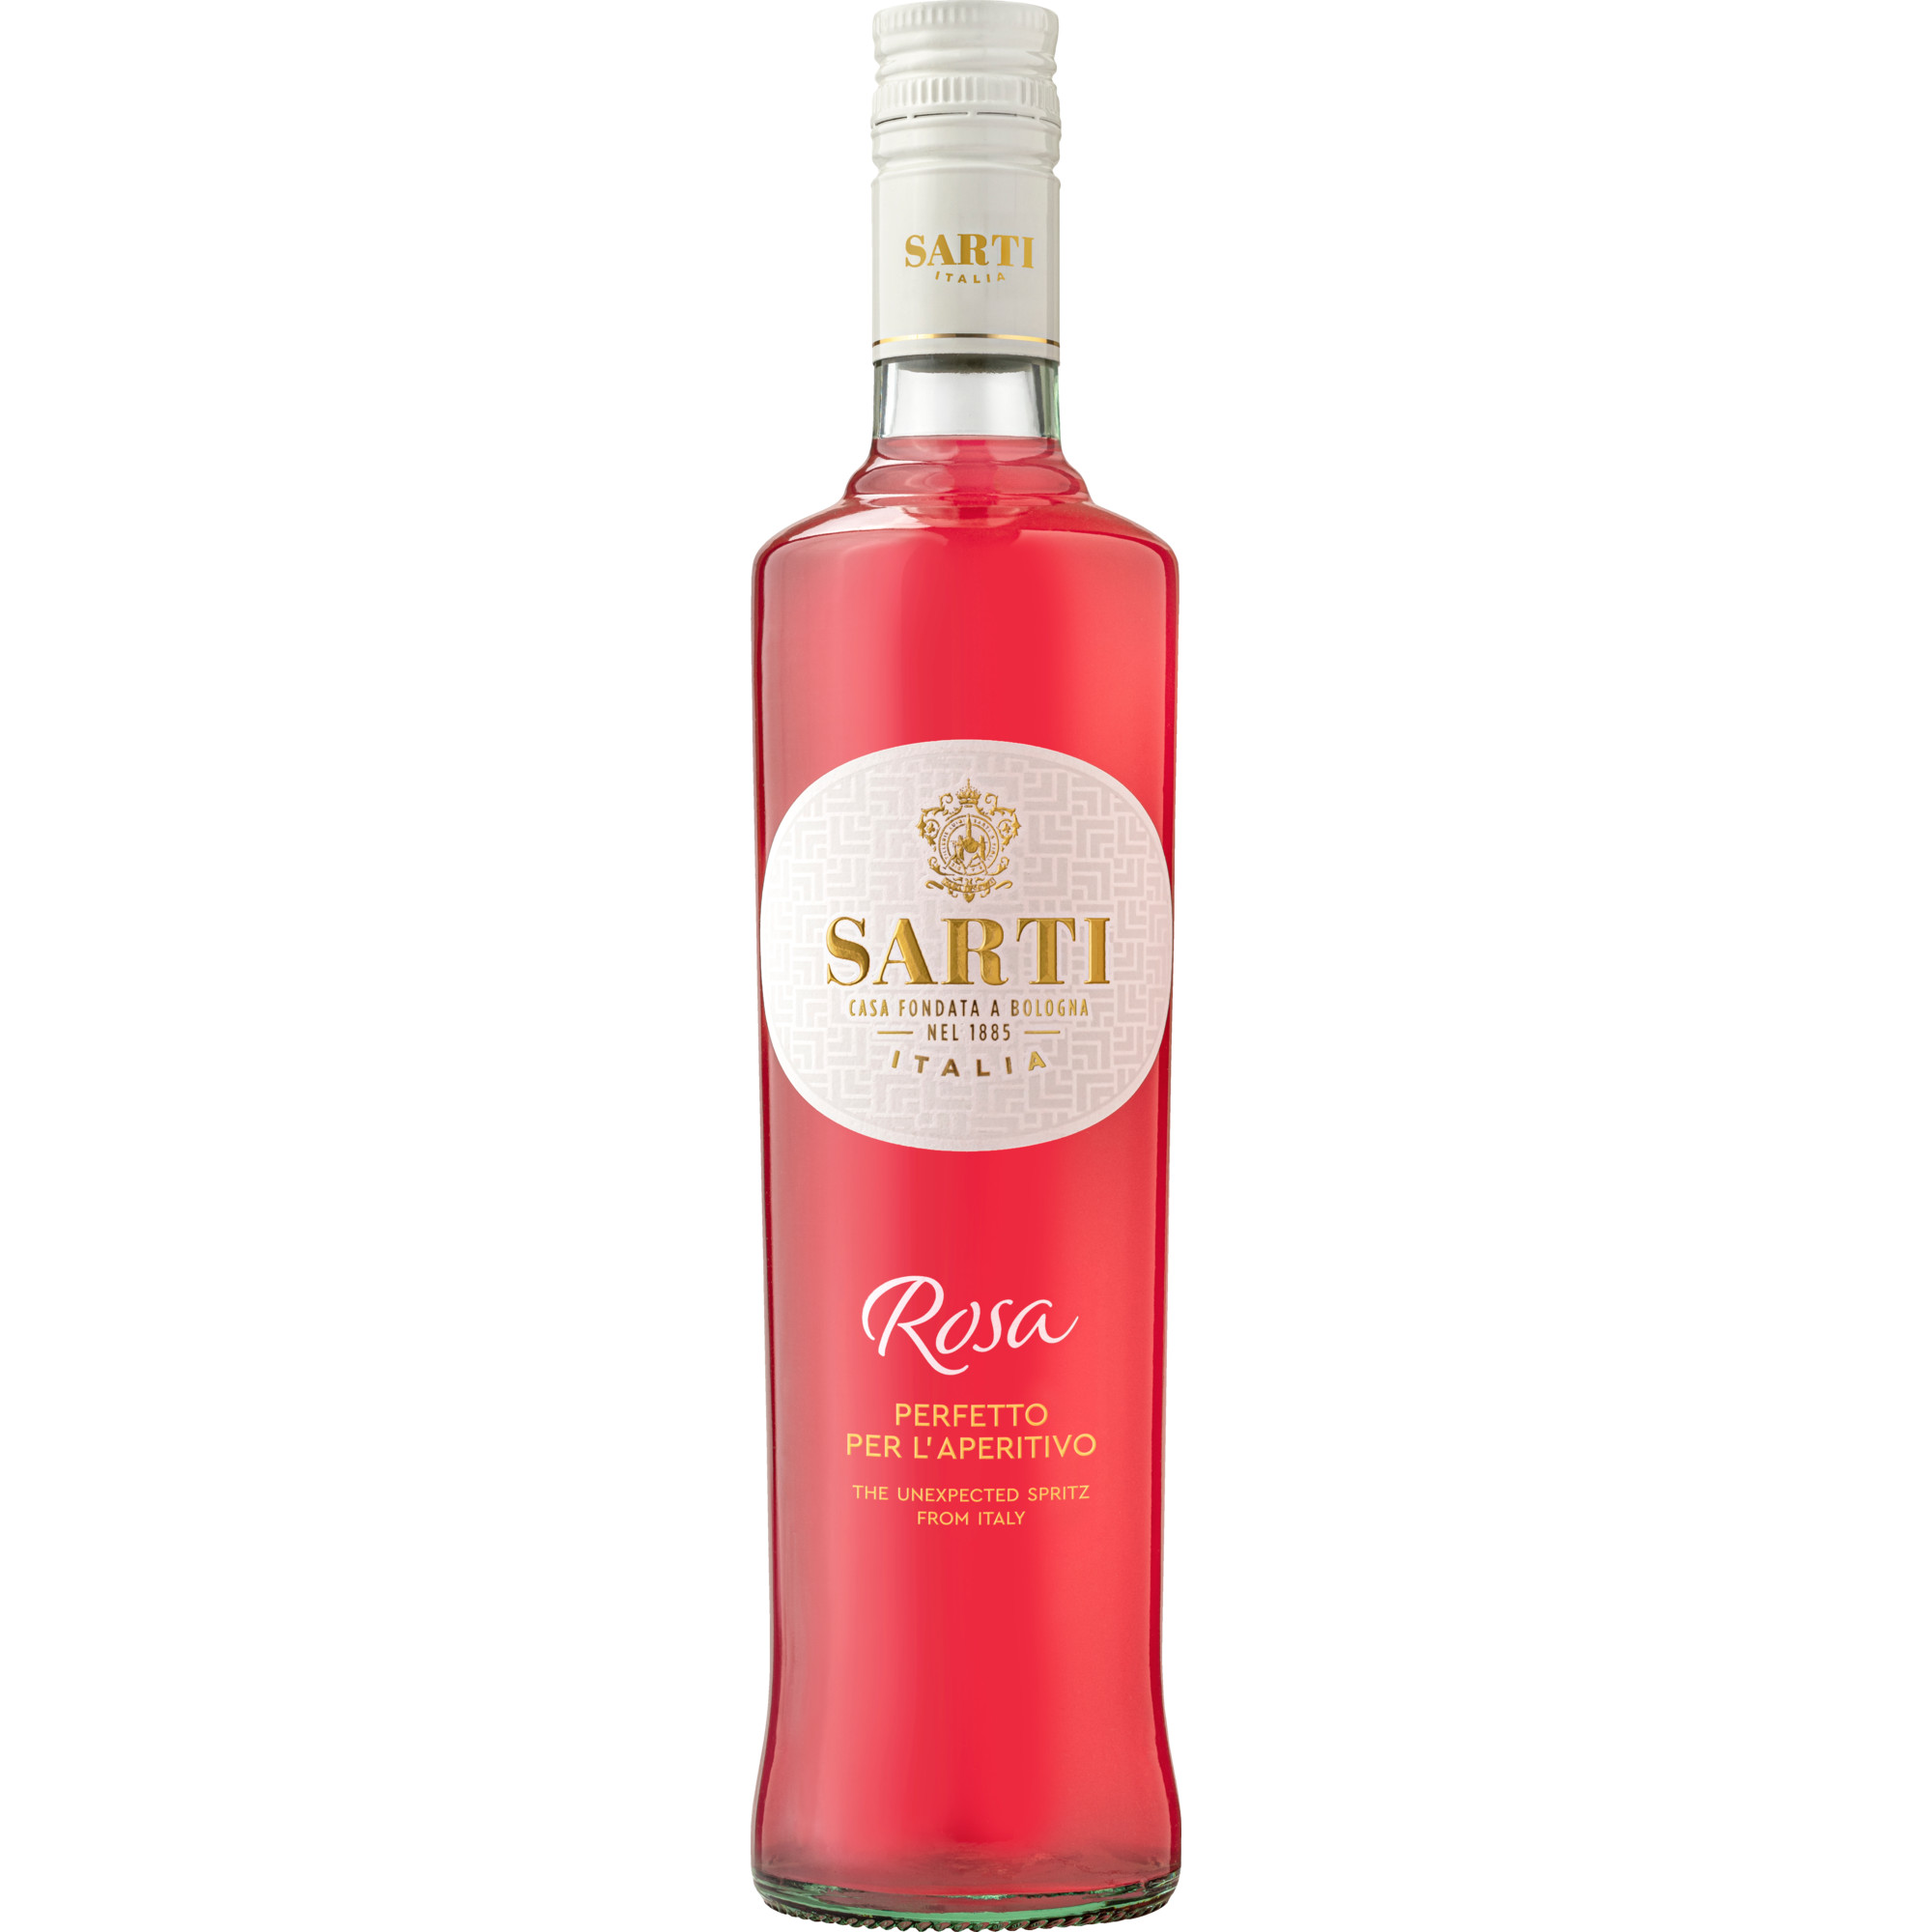 Sarti Rosa Aperitif, Italien, 0,7 L, 14% Vol., Spirituosen DCM N.V., Via F. Sacchetti 20, 20099 Sesto San Giovanni (MI), Italien Hawesko DE